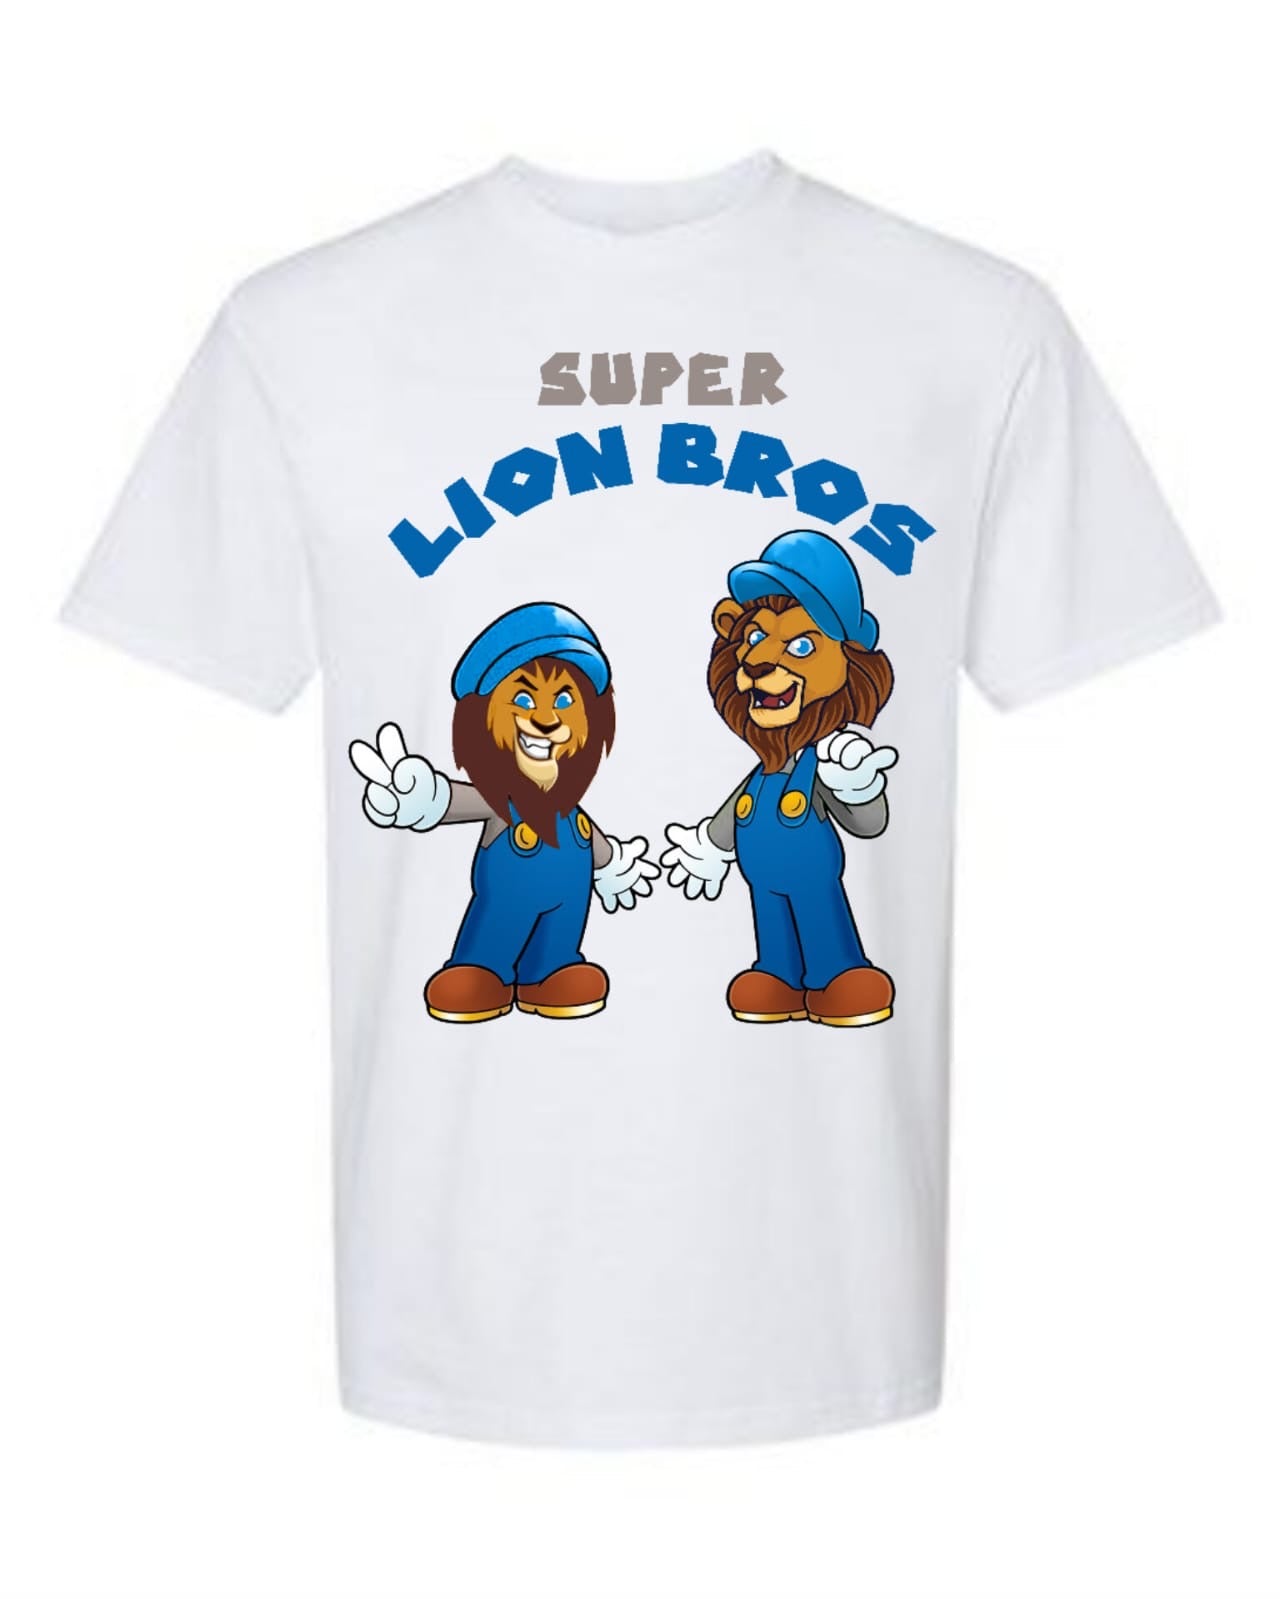 Super Lion Bros Short Sleeve T-Shirt